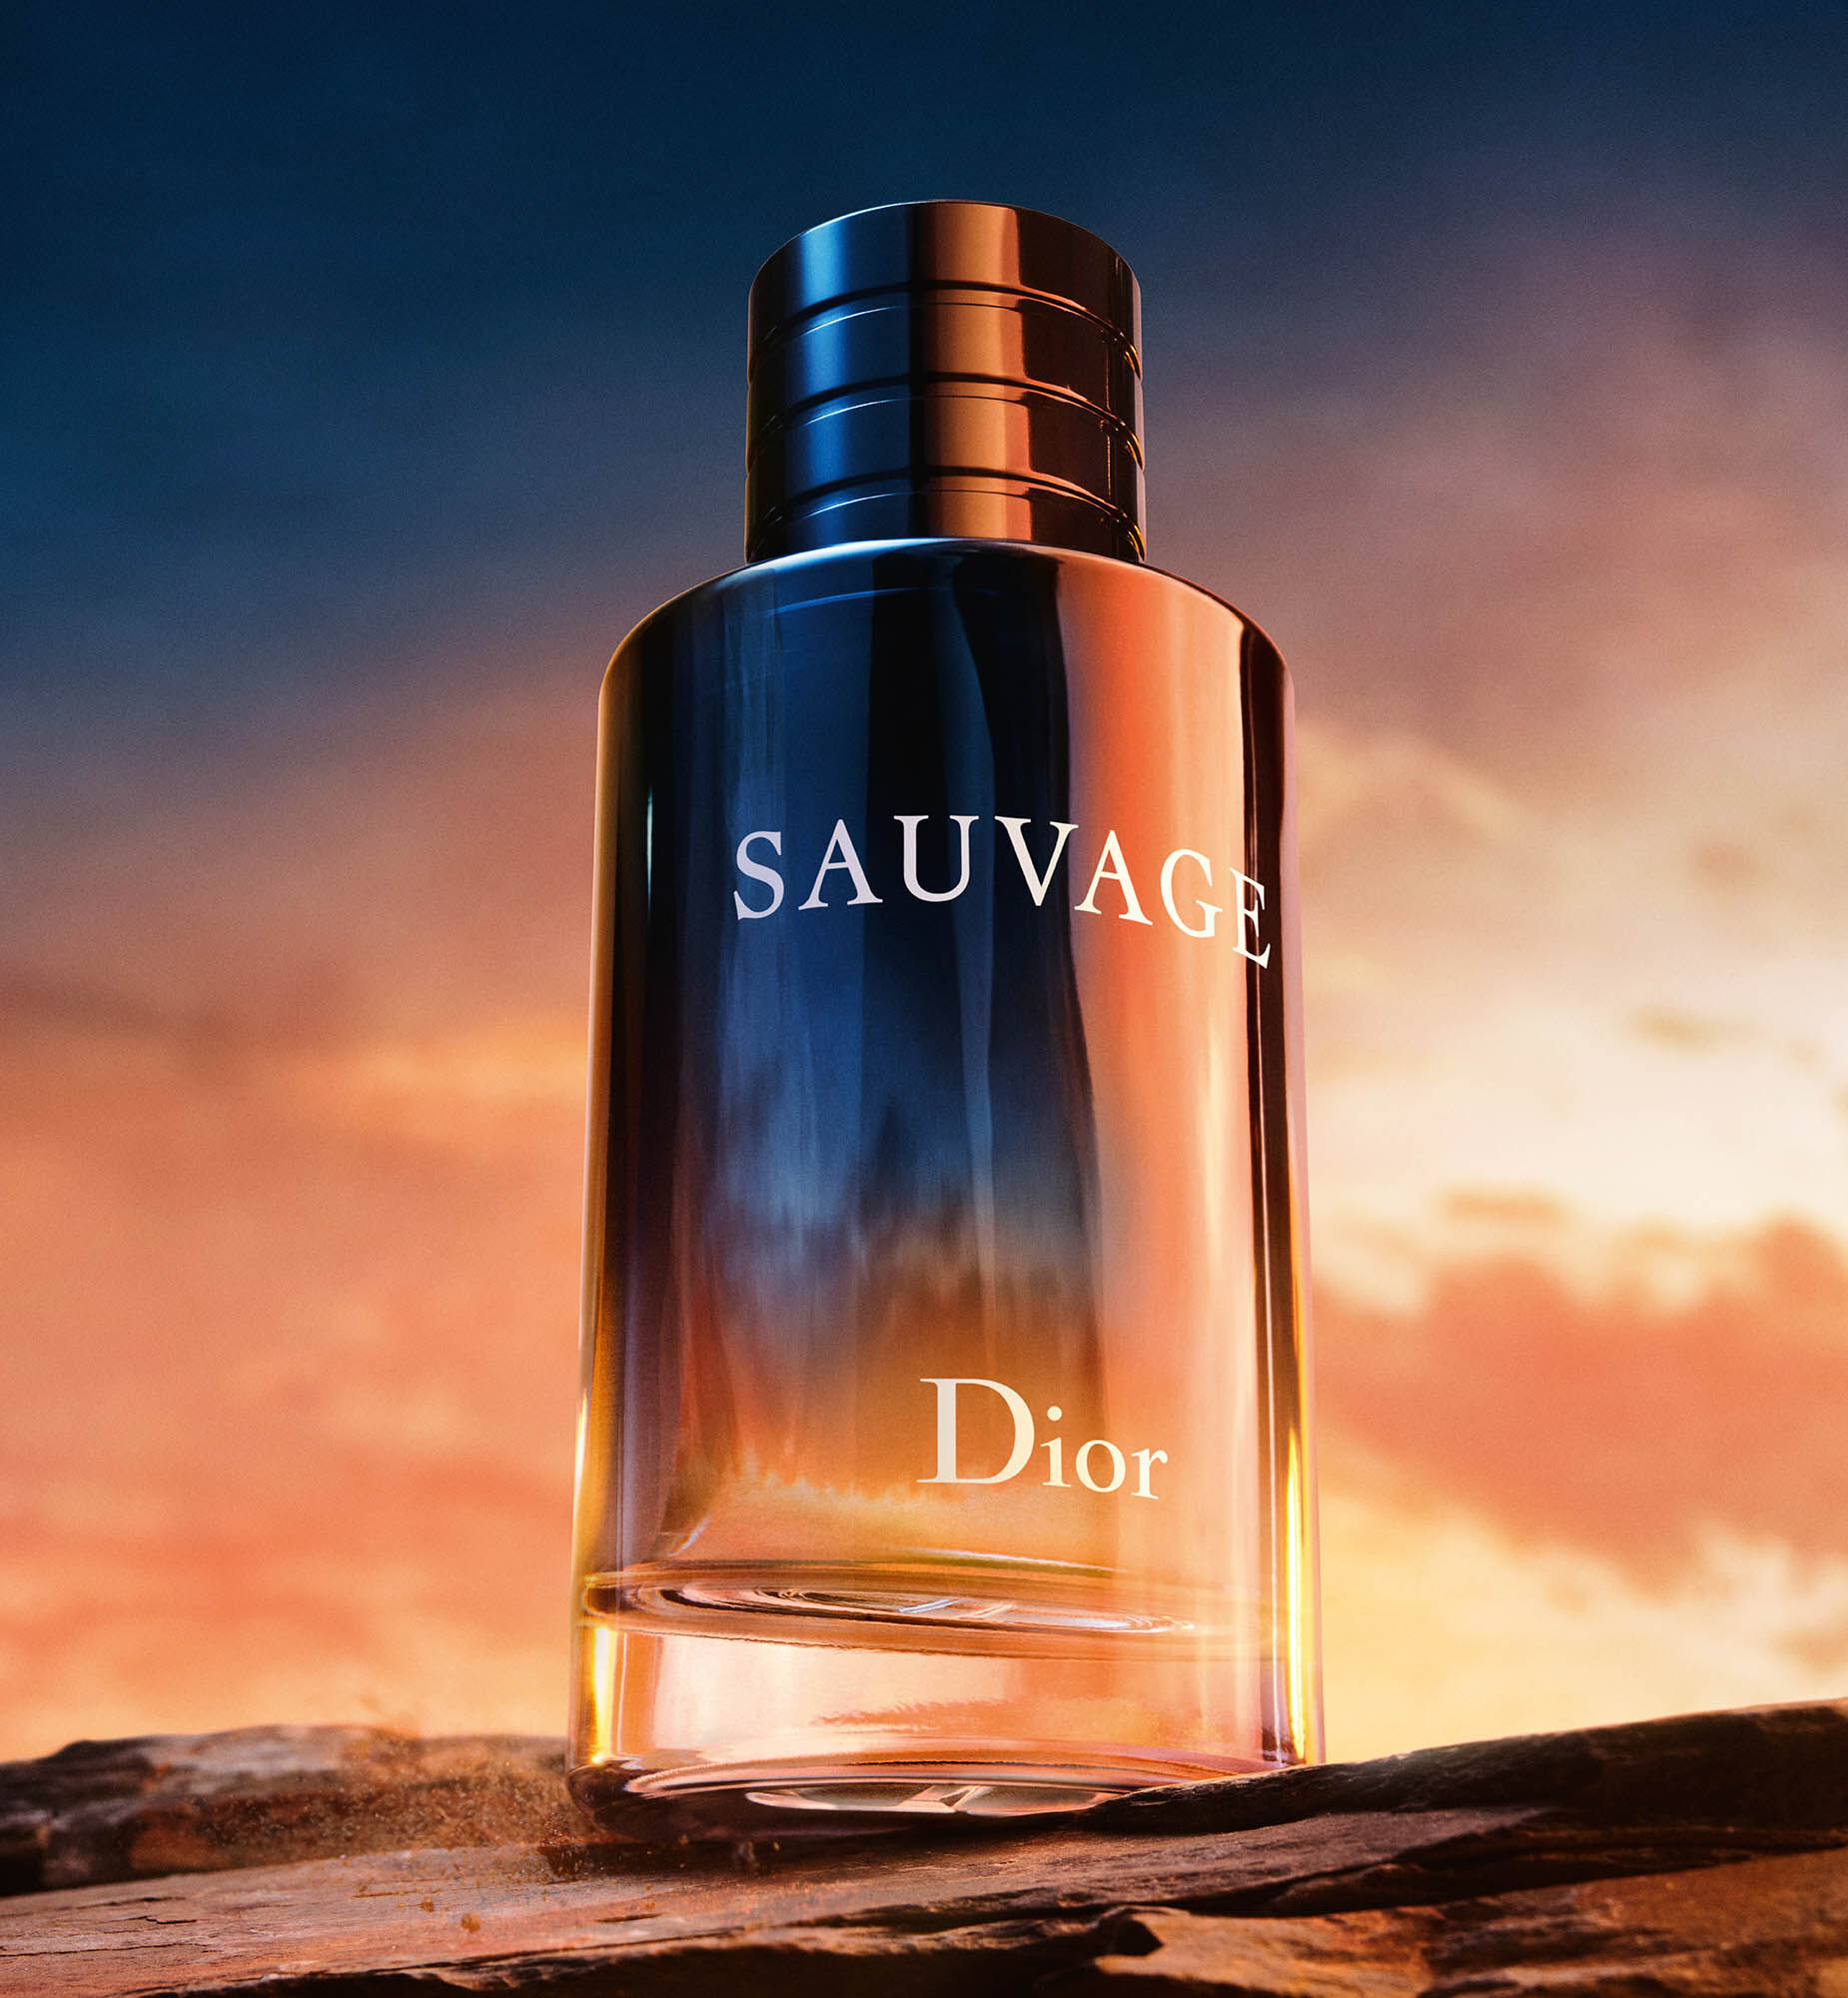 Dior SAUVAGE 〔オードゥトワレ〕 - alluredental.com